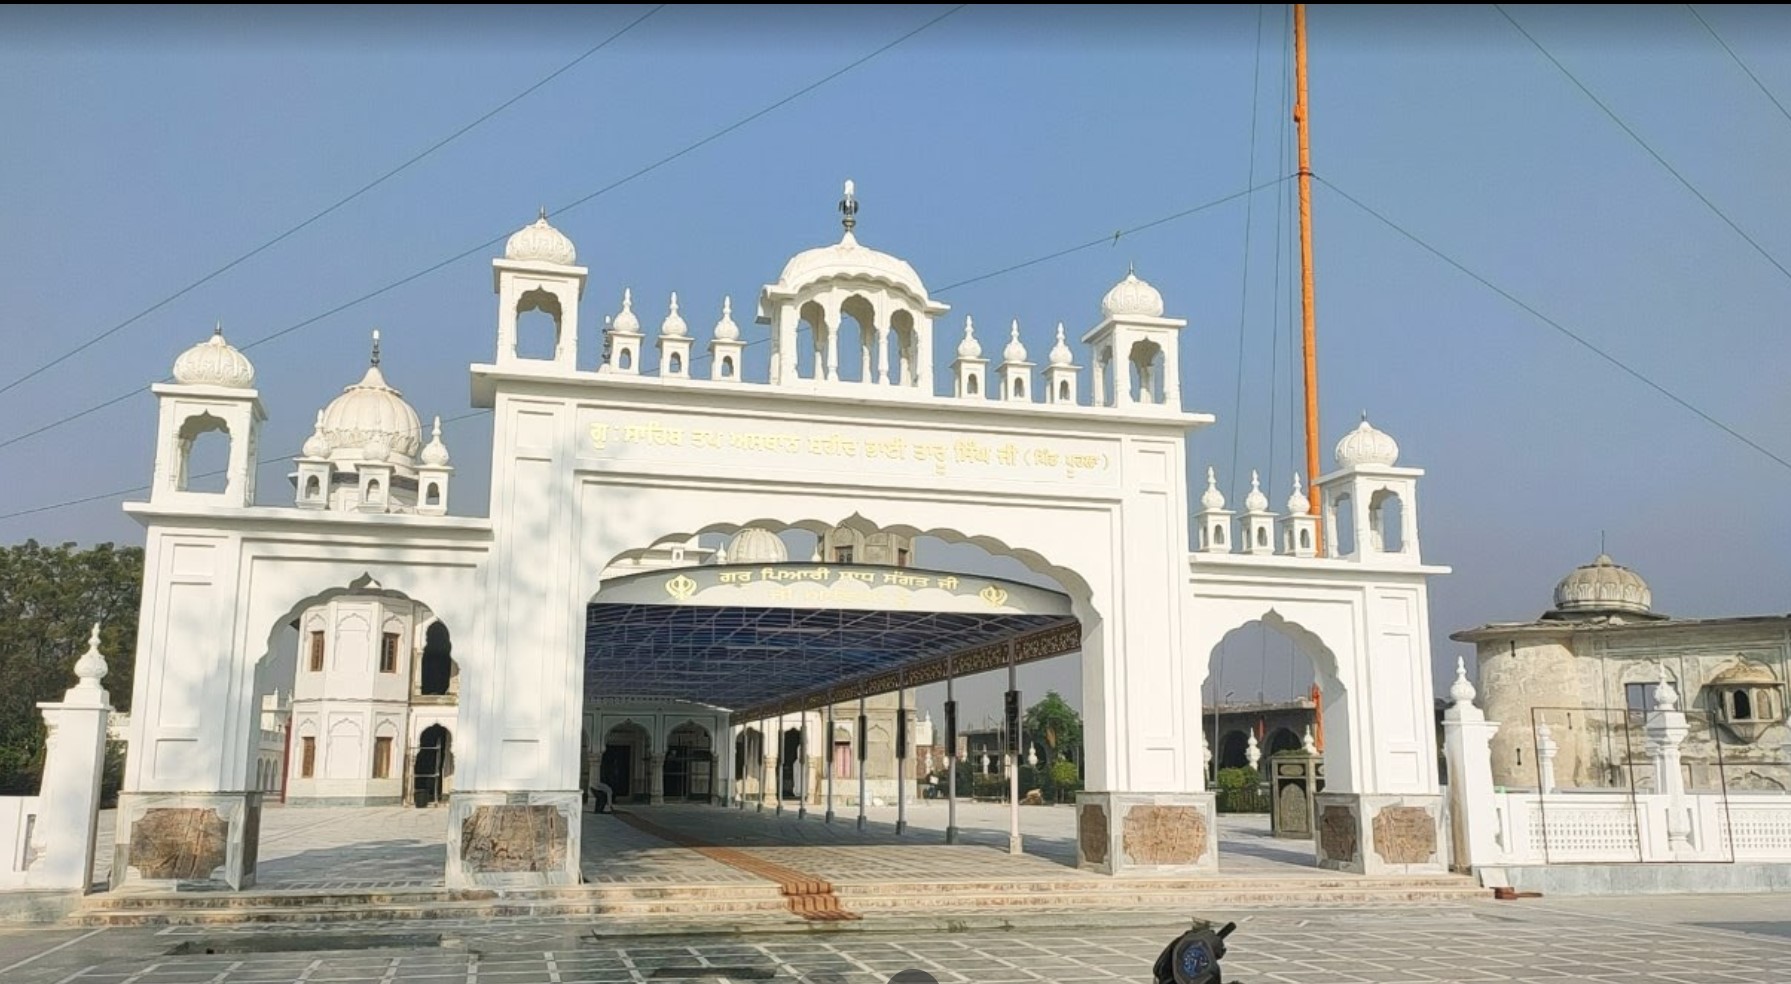 Gurdwara Baba Taru Singh Ji Shaheed